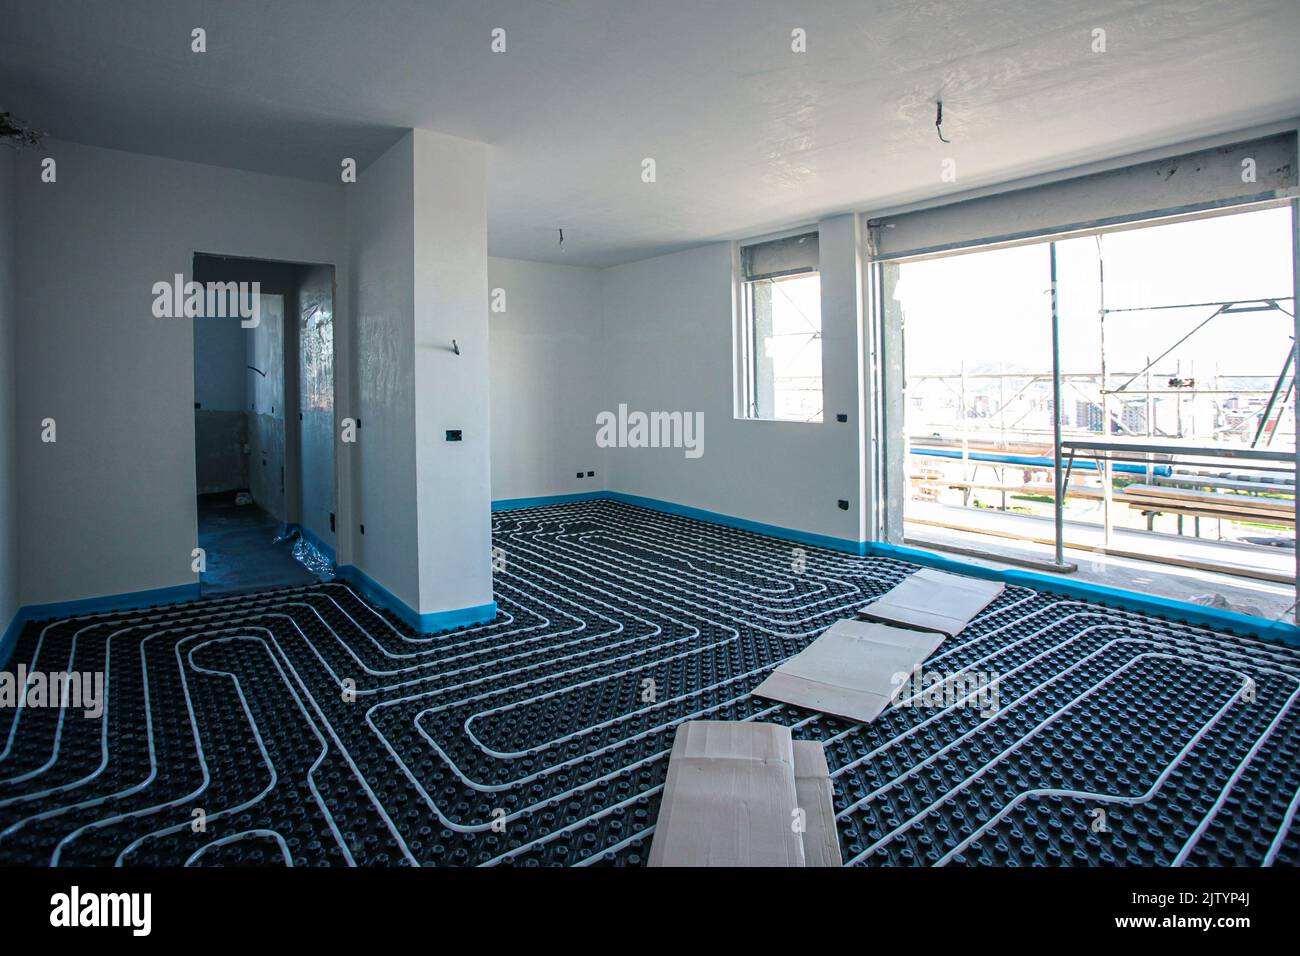 Underfloor heating. Underfloor heating system in a modern building under construction. Stock Photo